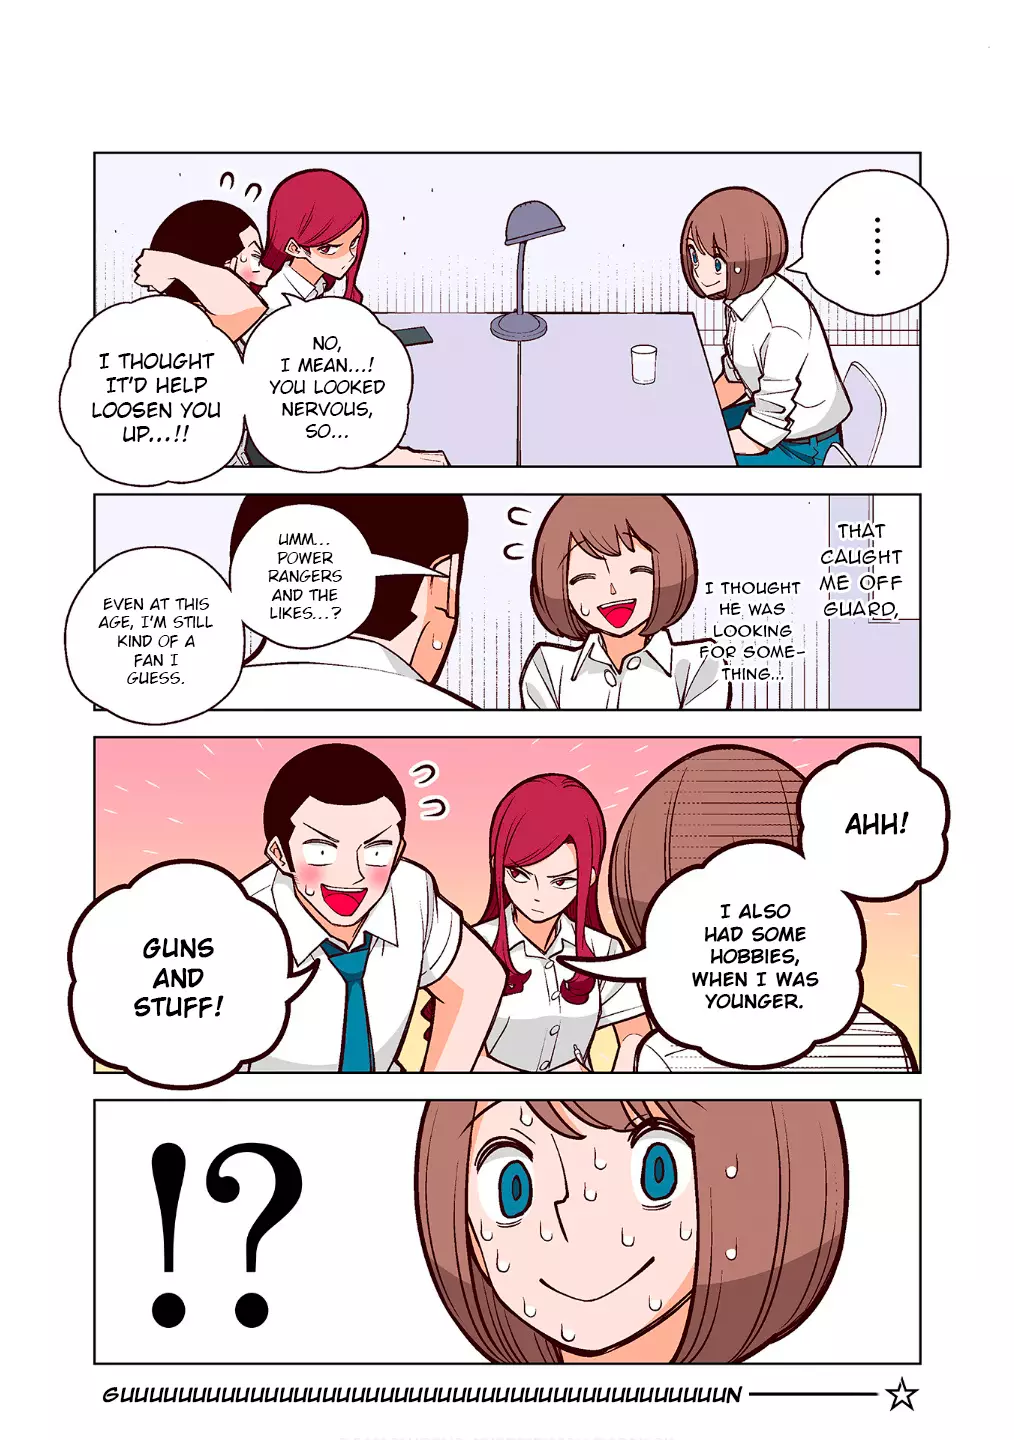 Kanako's Life As An Assassin - 19 page 3